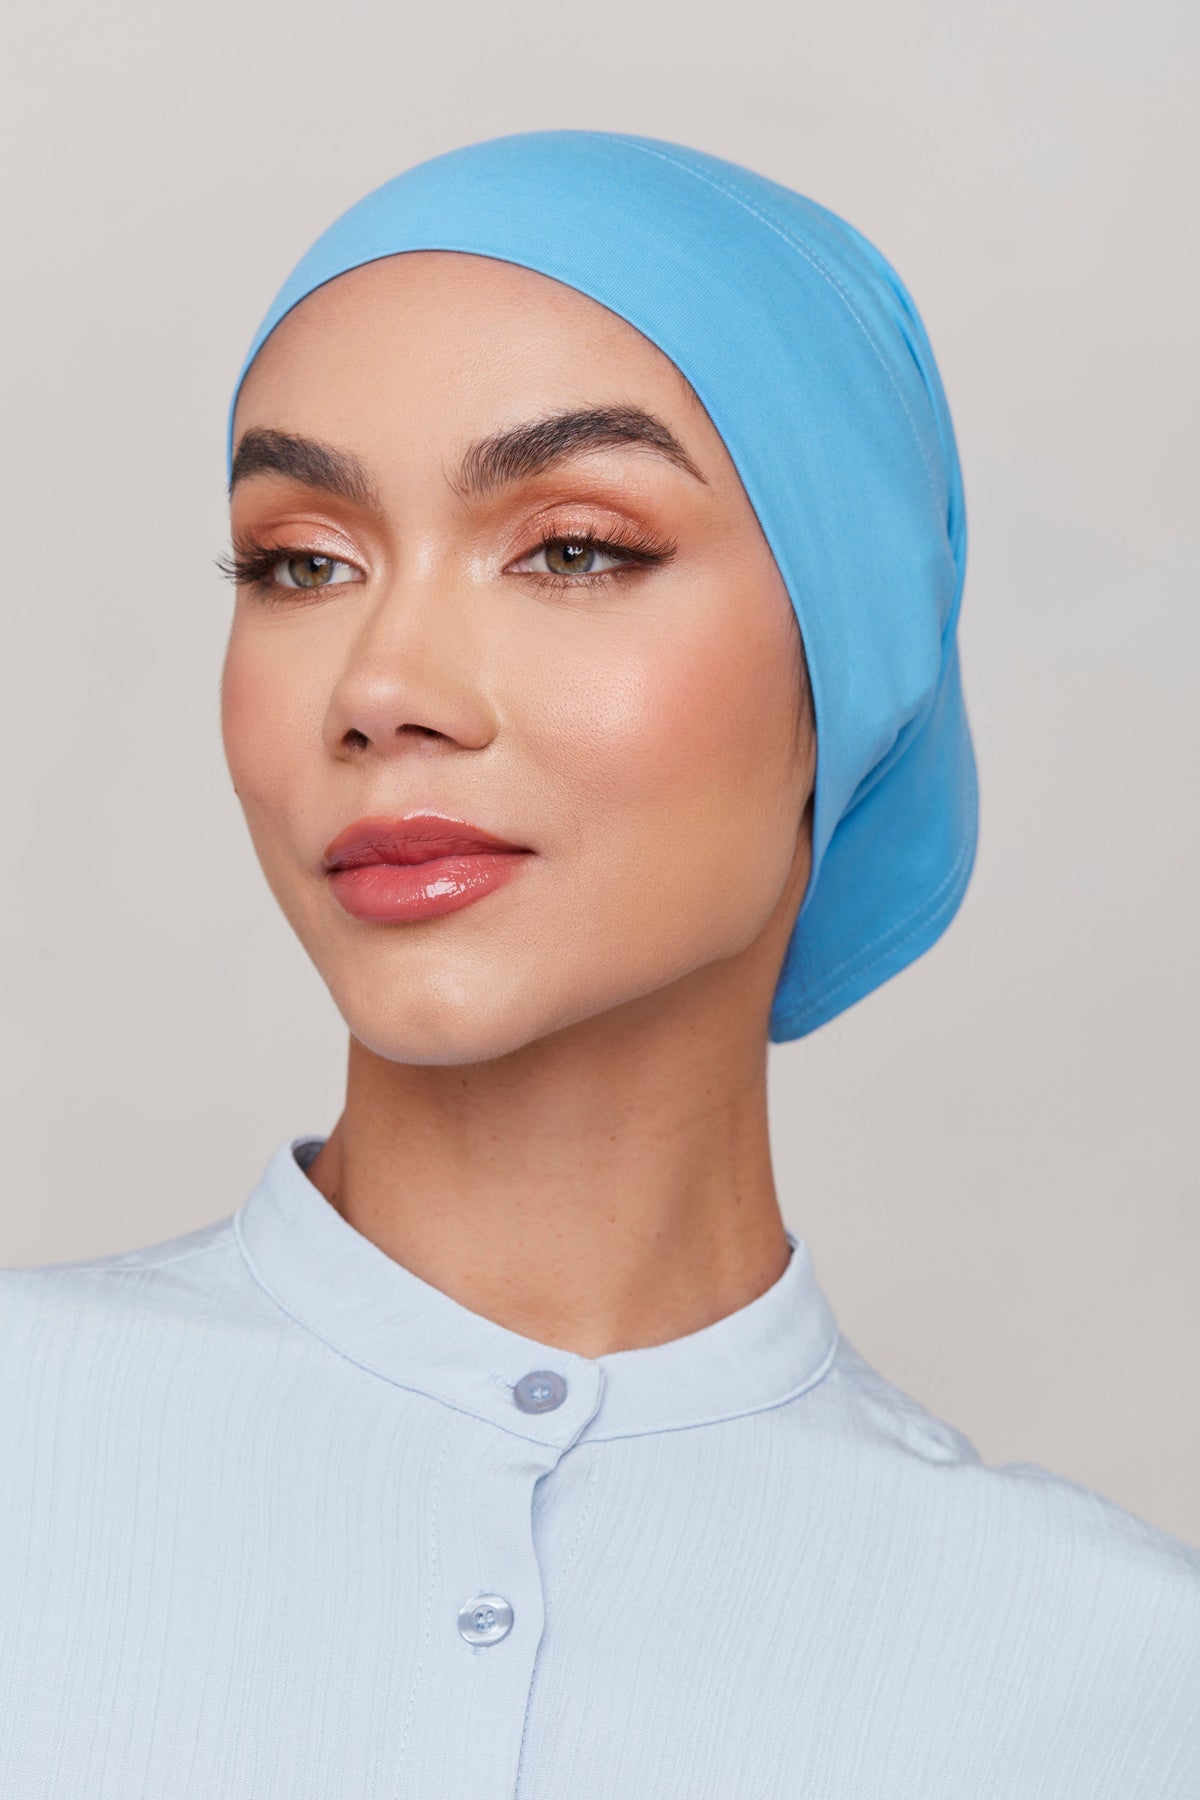 Hybeeh 4 Pieces Hijab Undercap Hijab Underscarf Hijab Cap for Women